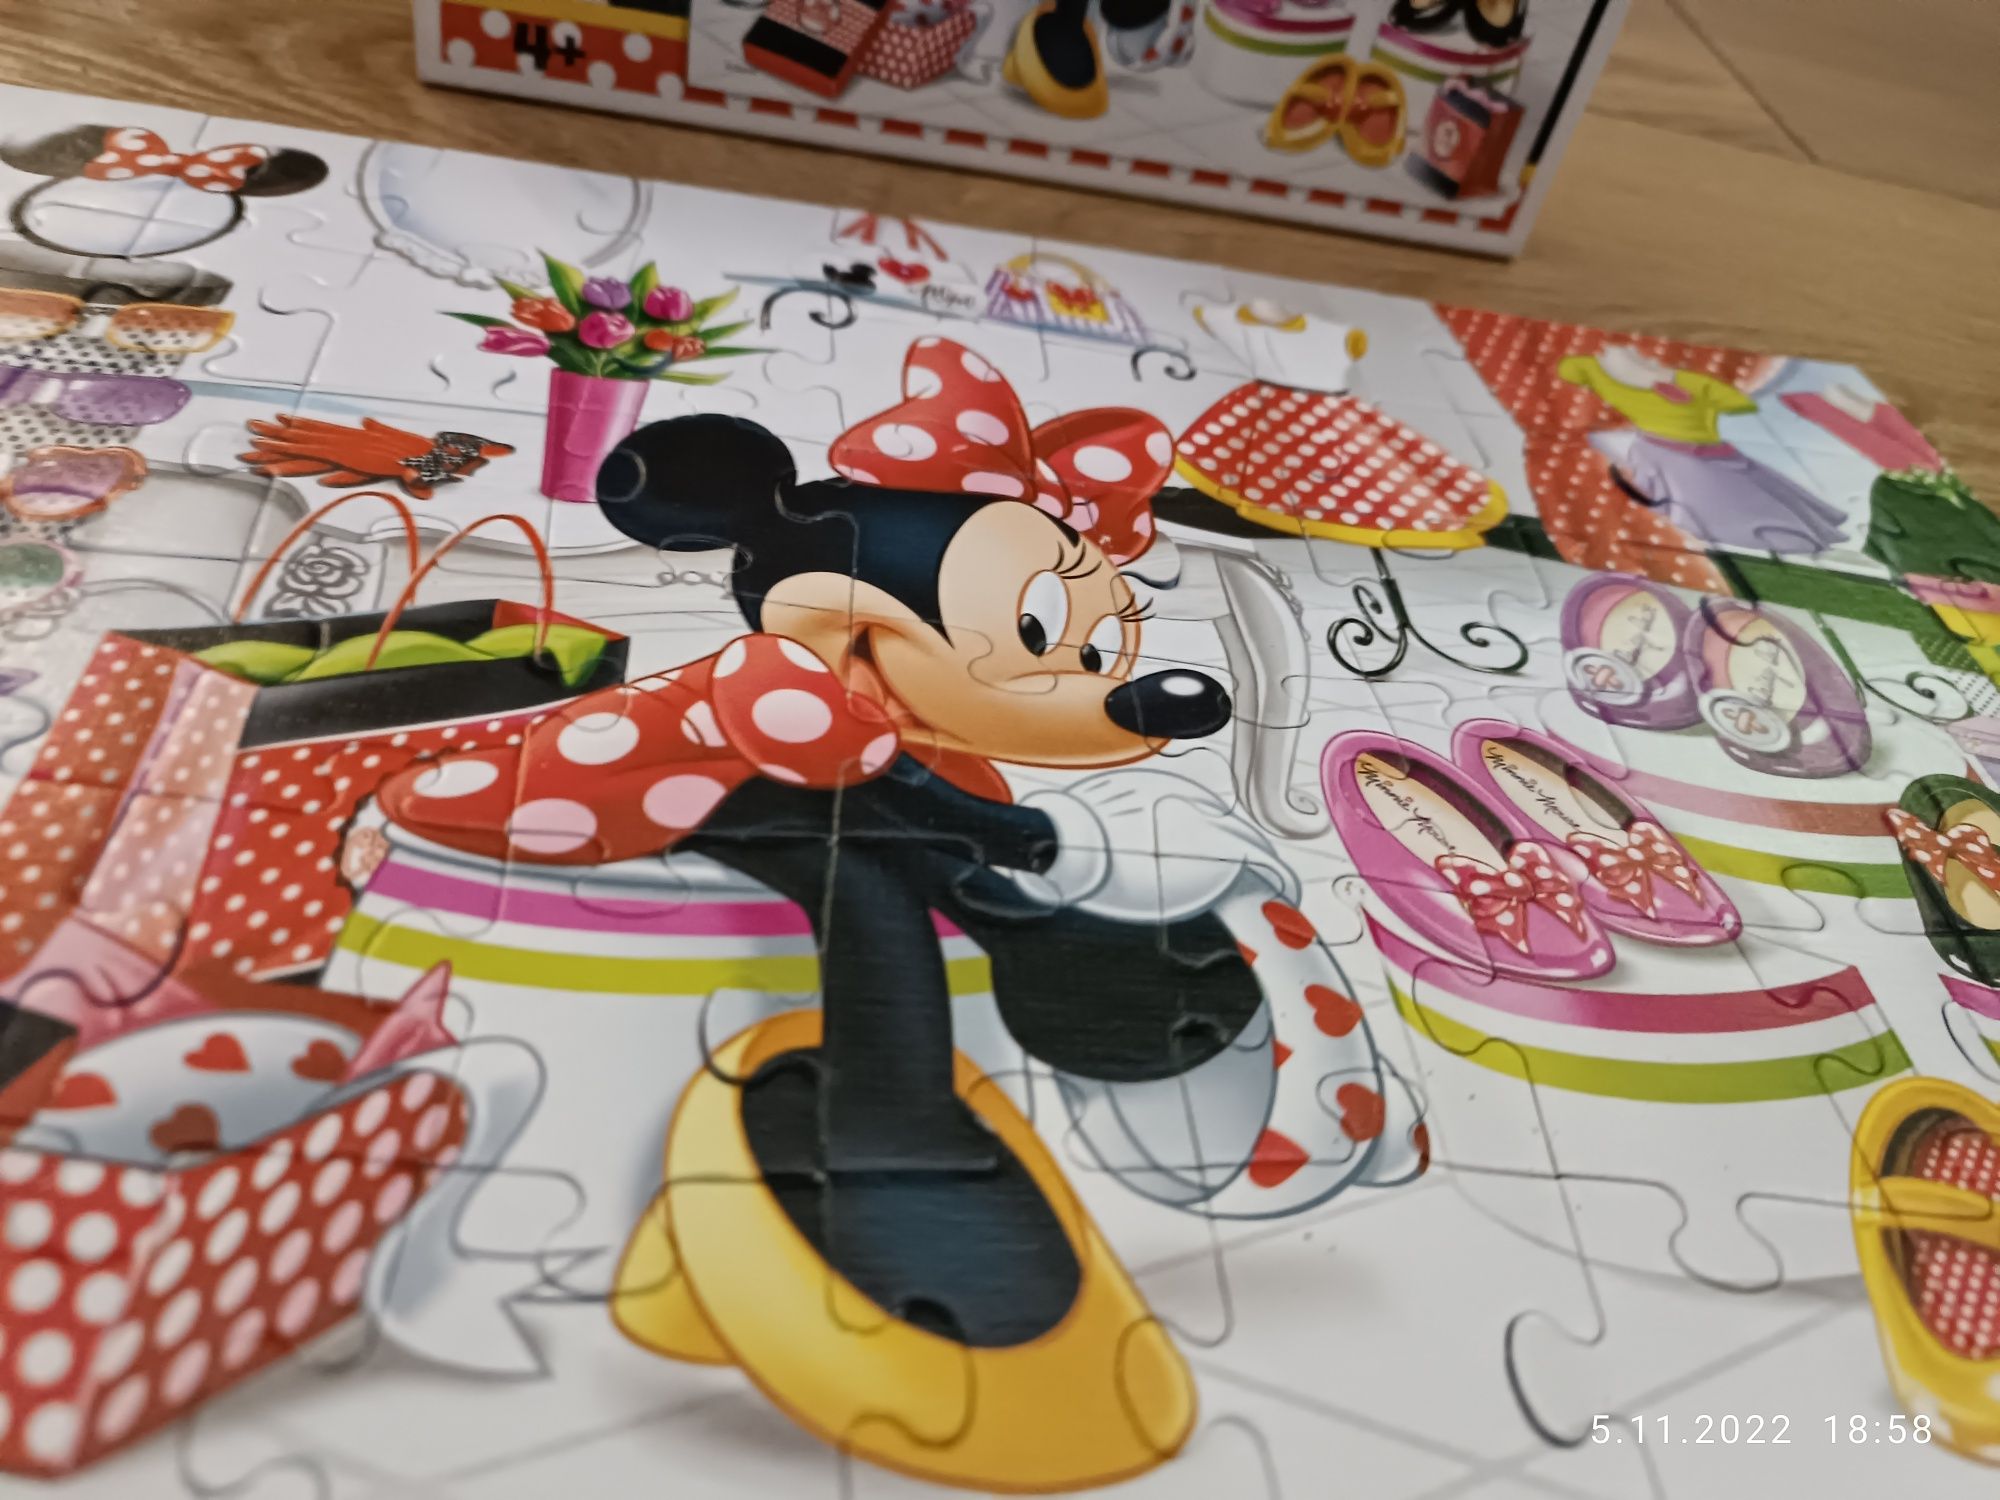 Puzzle Minnie Mouse Disney TREFL 60szt. plus gratis zestaw 100szt..